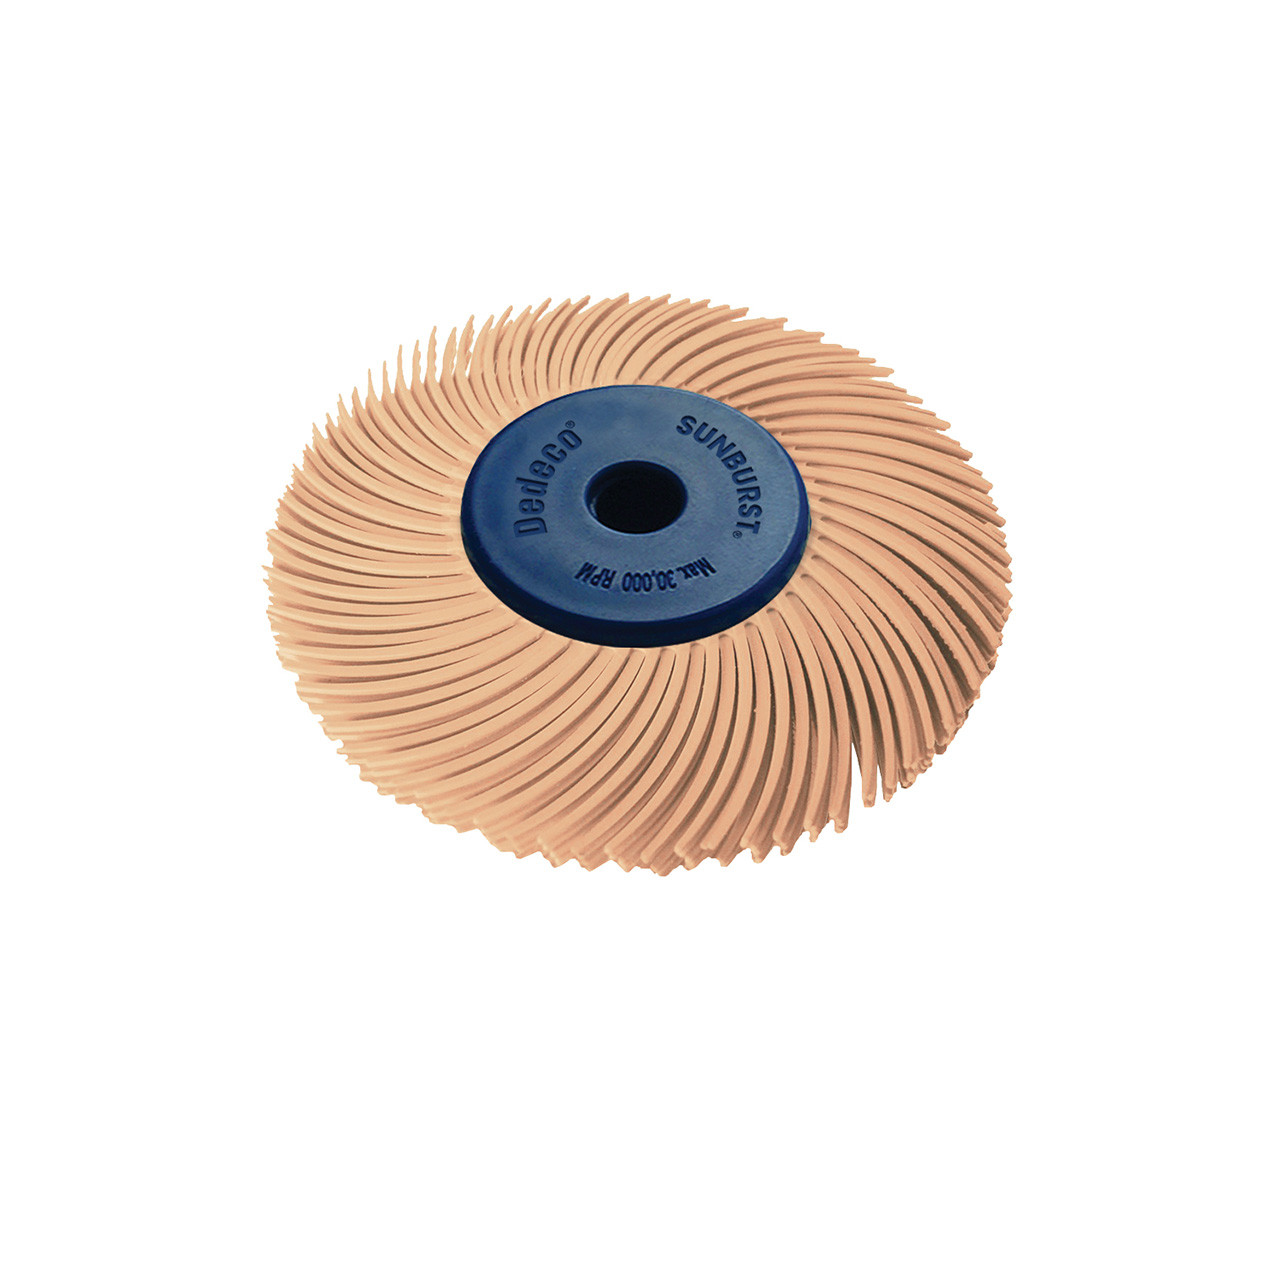 Dedeco® SUNBURST® Radial Discs - 2" 3-Ply, 6 Micron